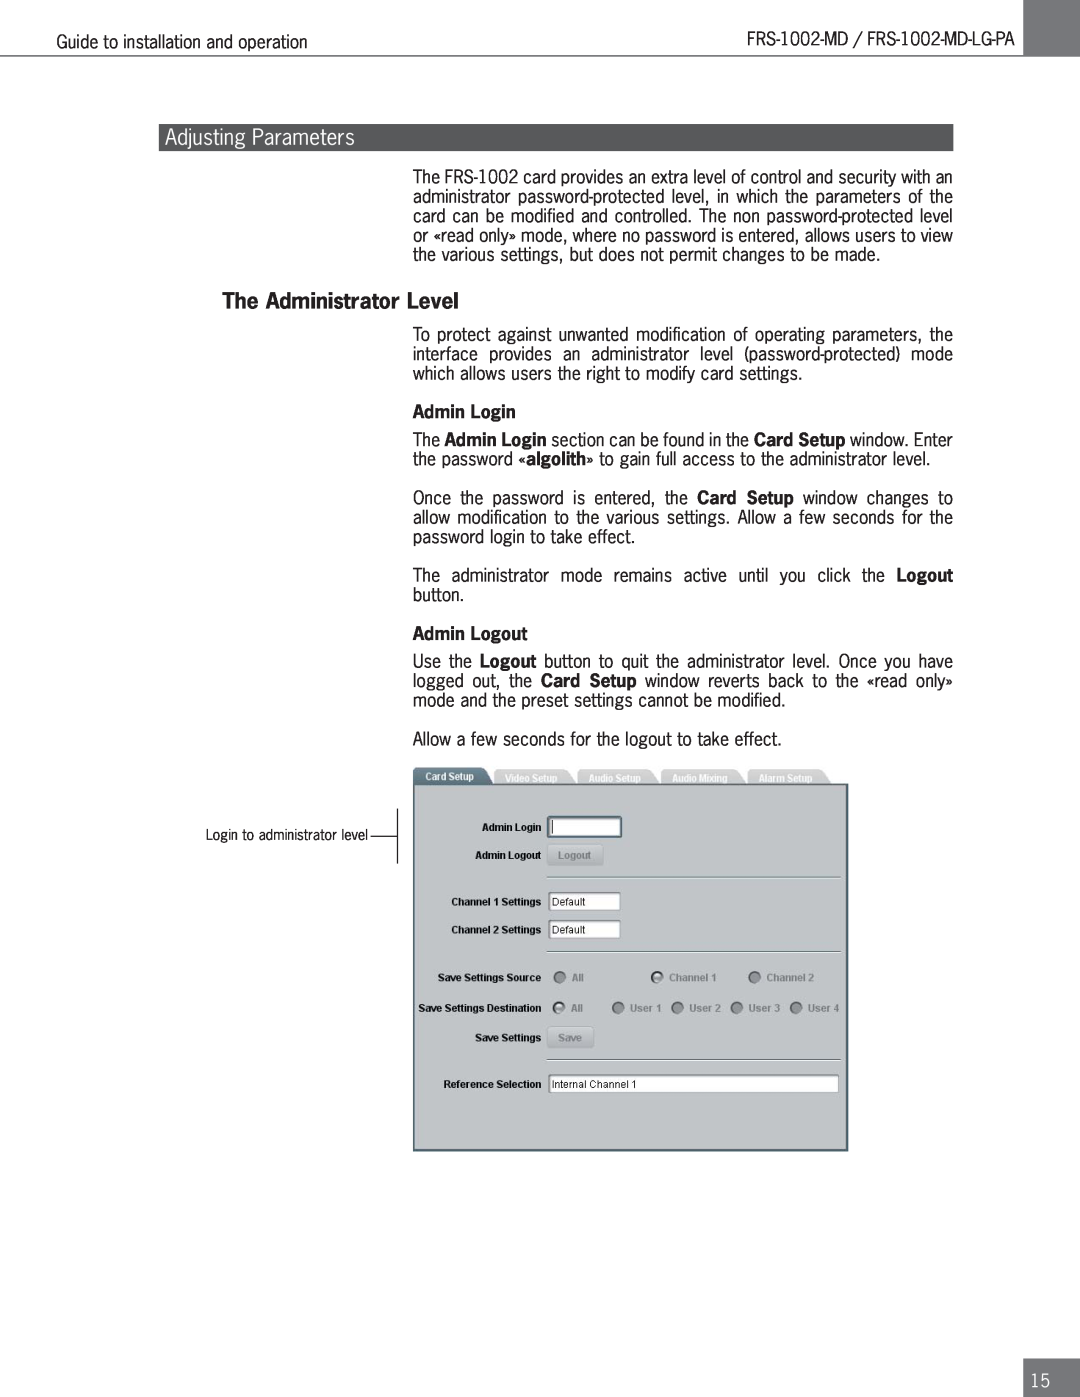 Algolith FRS-1002-MD operation manual The Administrator Level, Adjusting Parameters, Admin Login, Admin Logout 